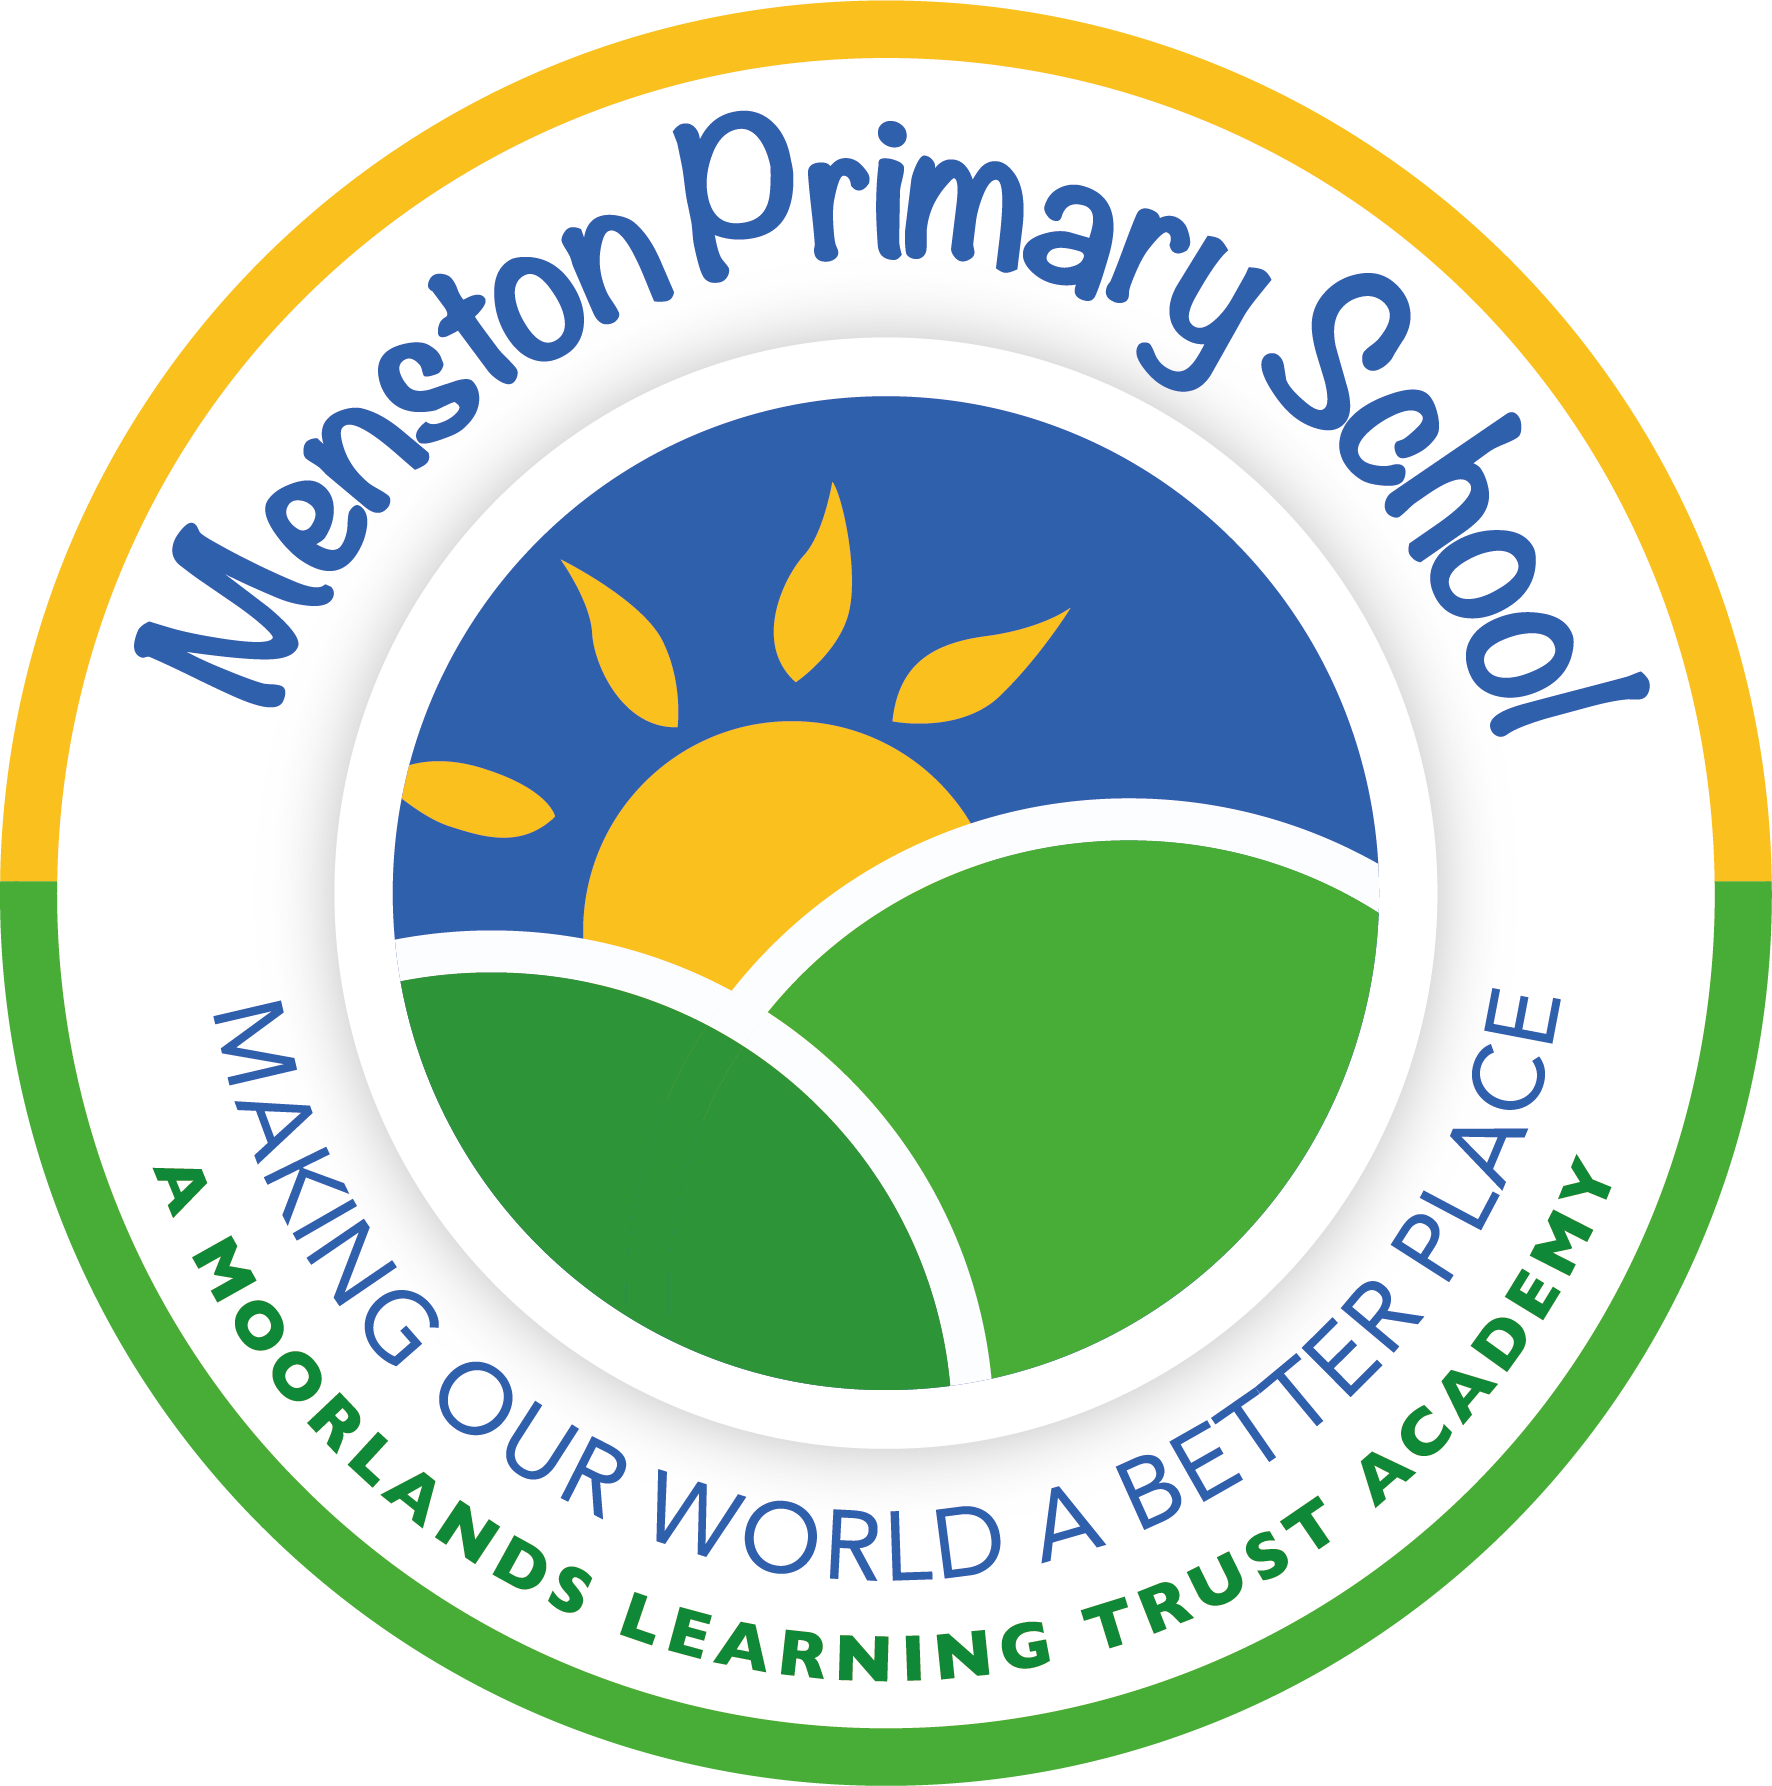 Menston Primary School logo